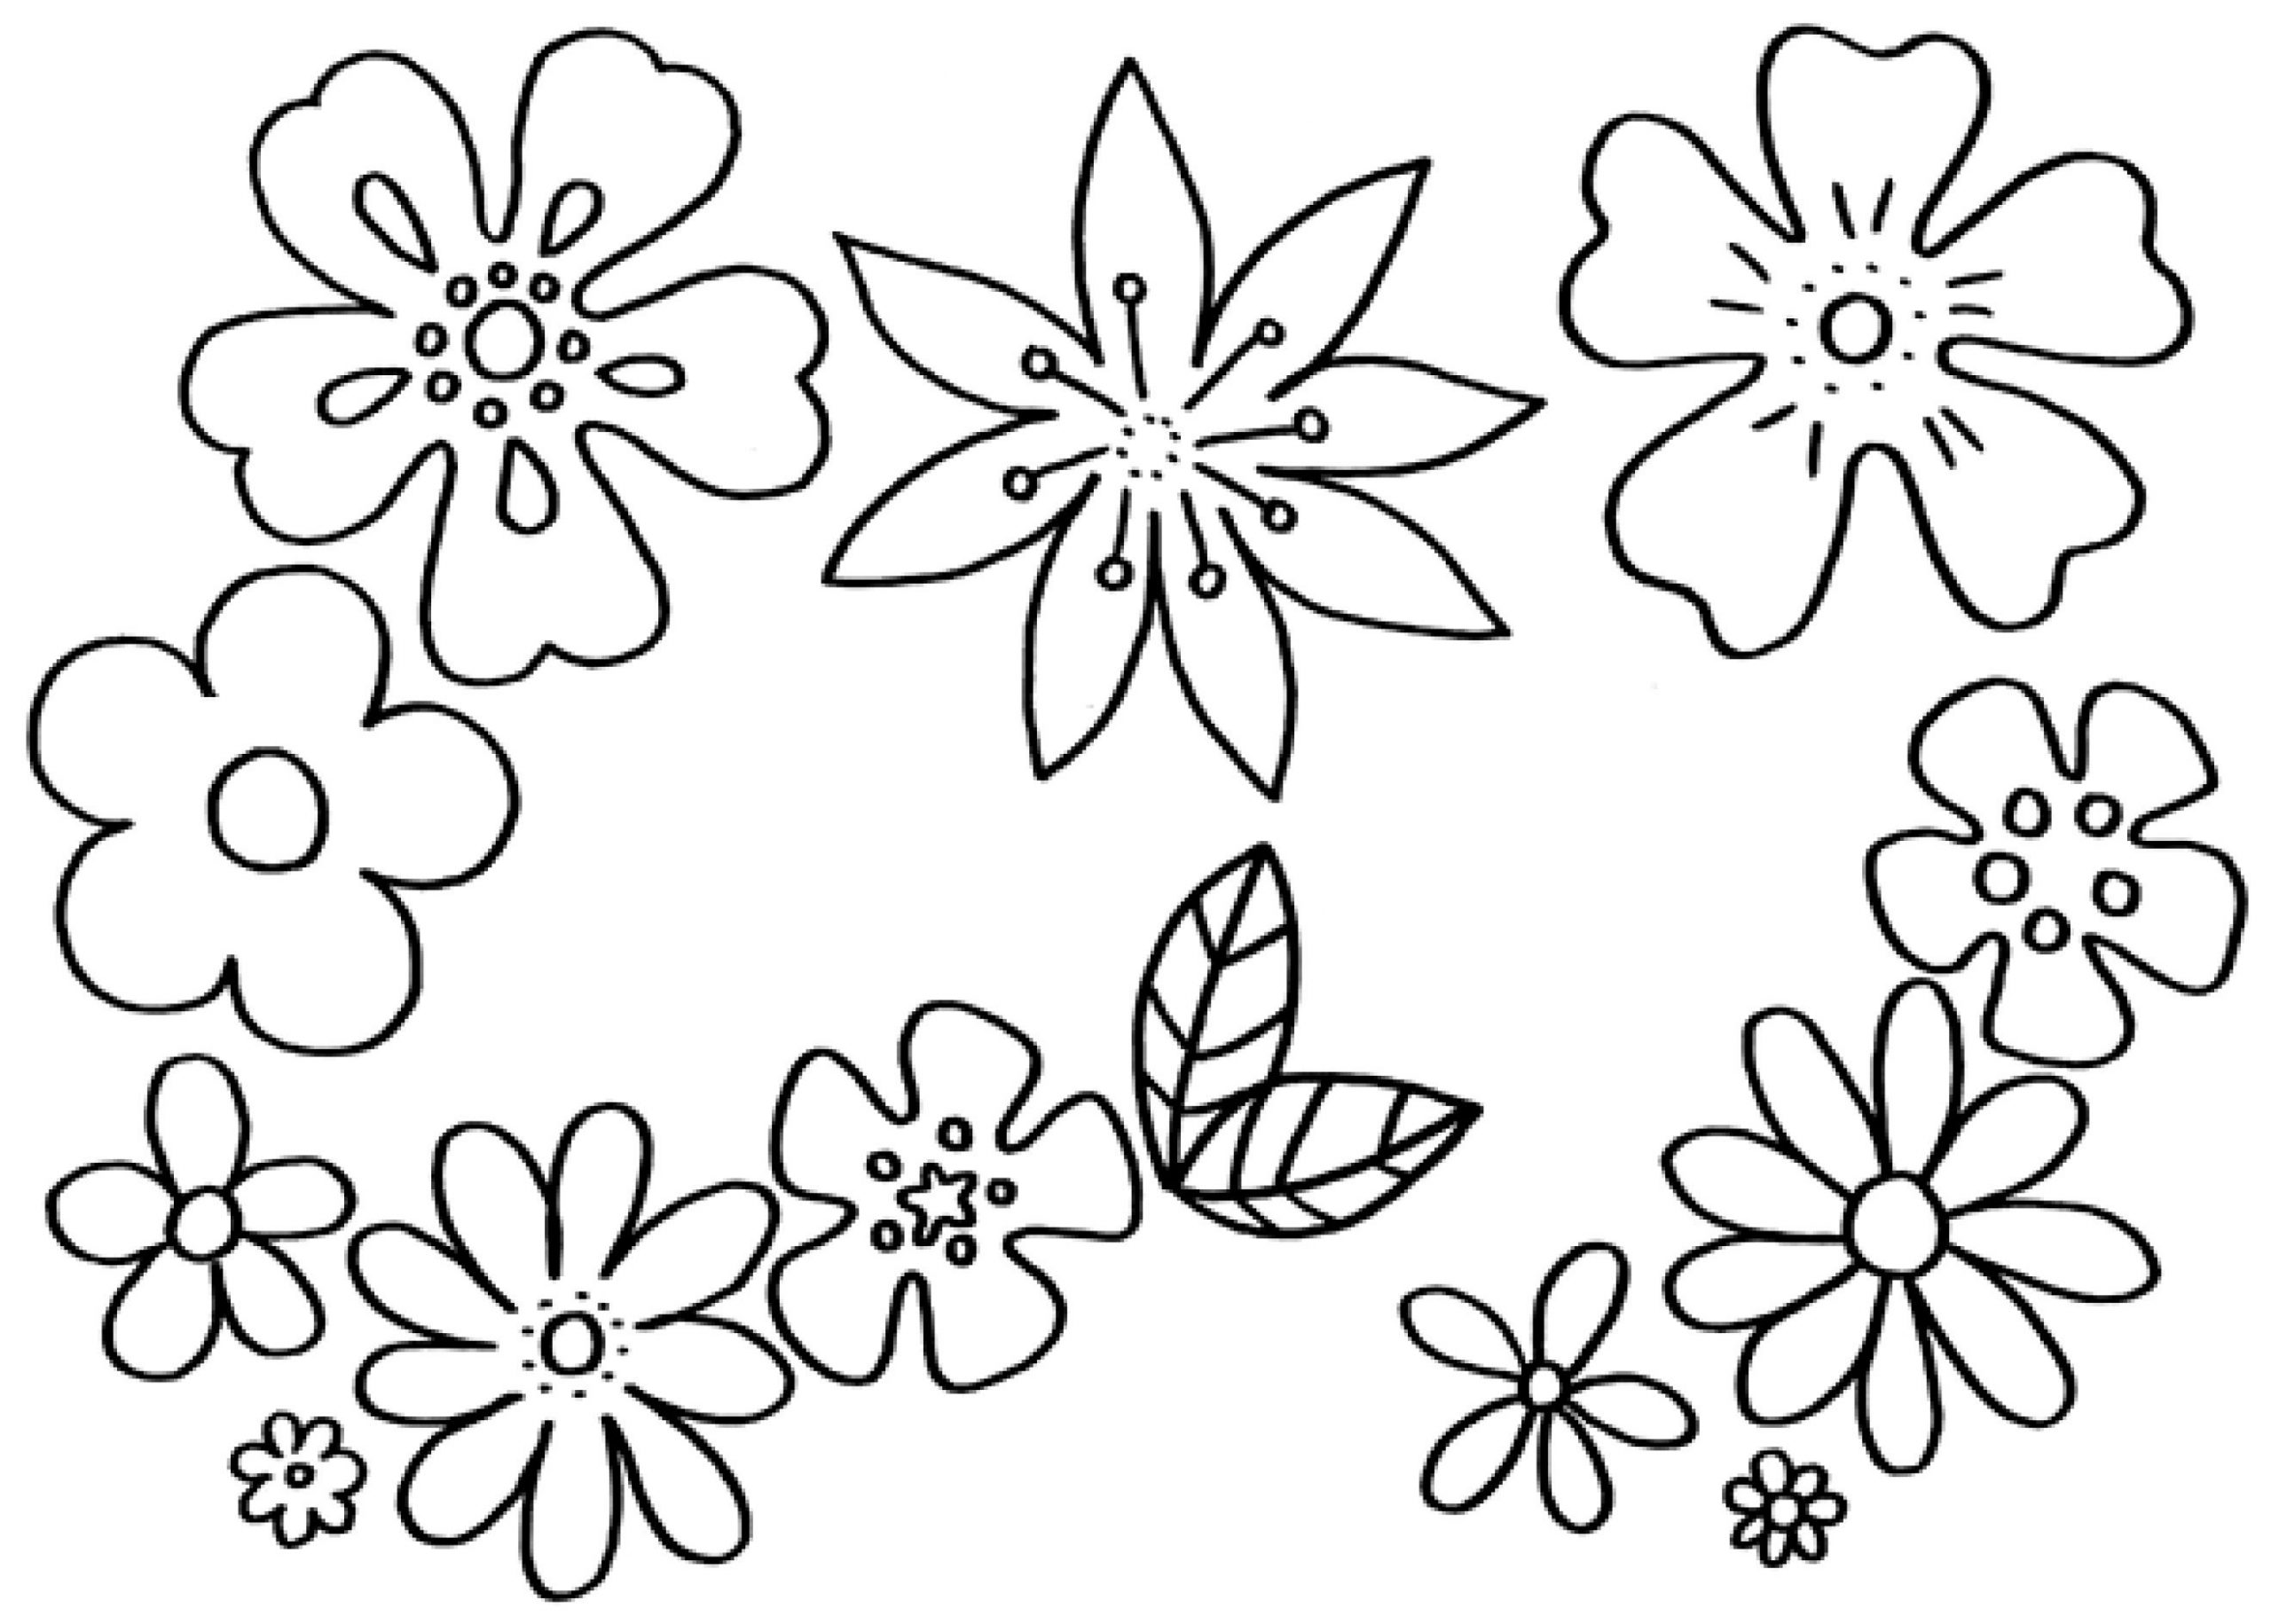 Malvorlagen Blumen - Kostenlose Ausmalbilder | Mytoys Blog innen